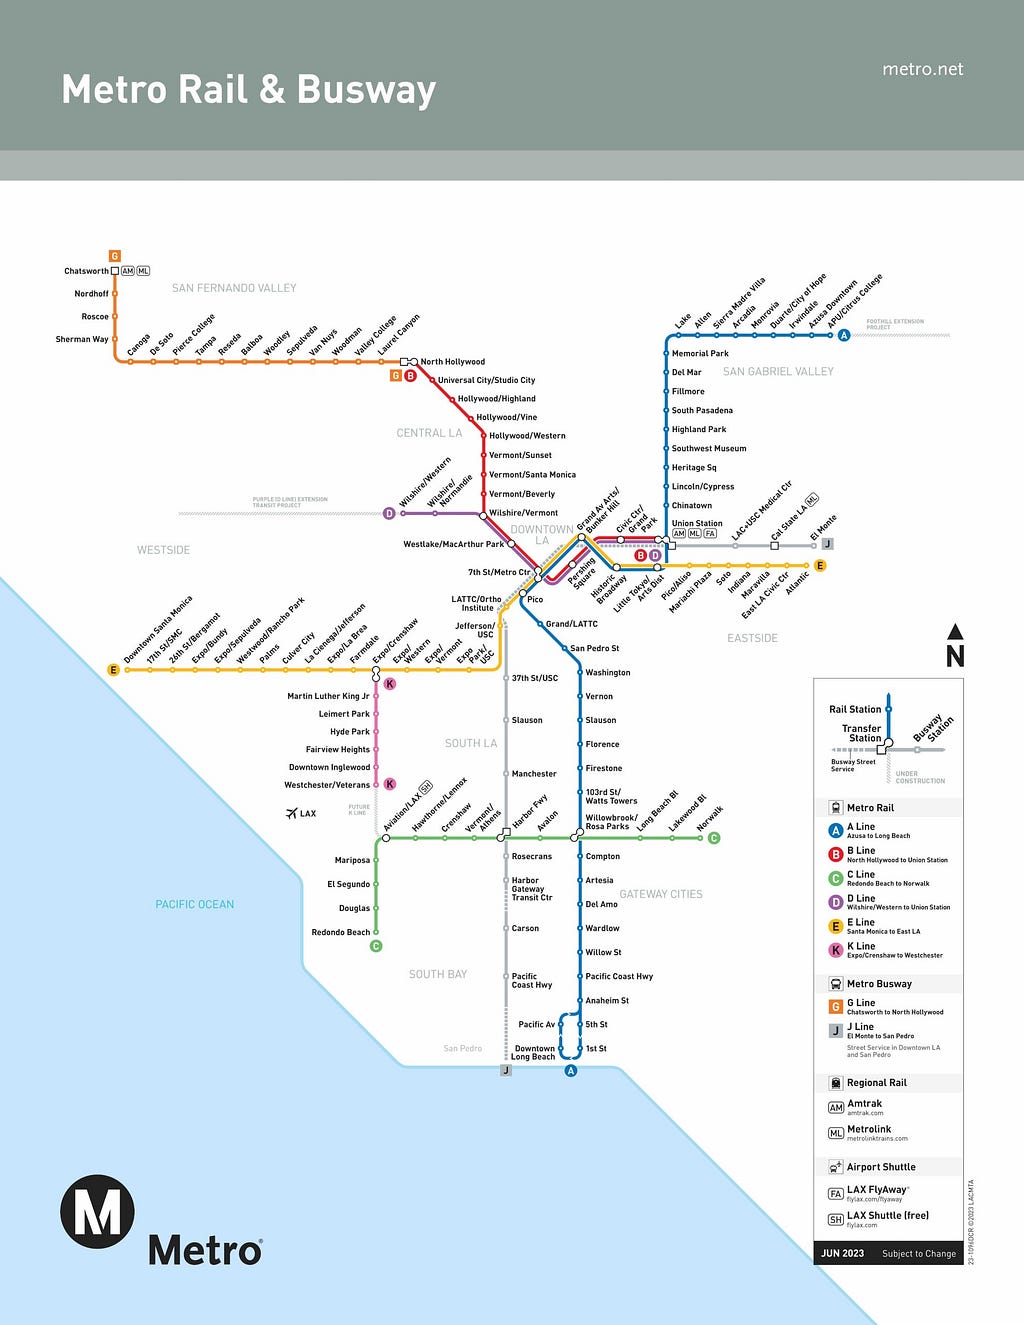 Map of LA’s transit network